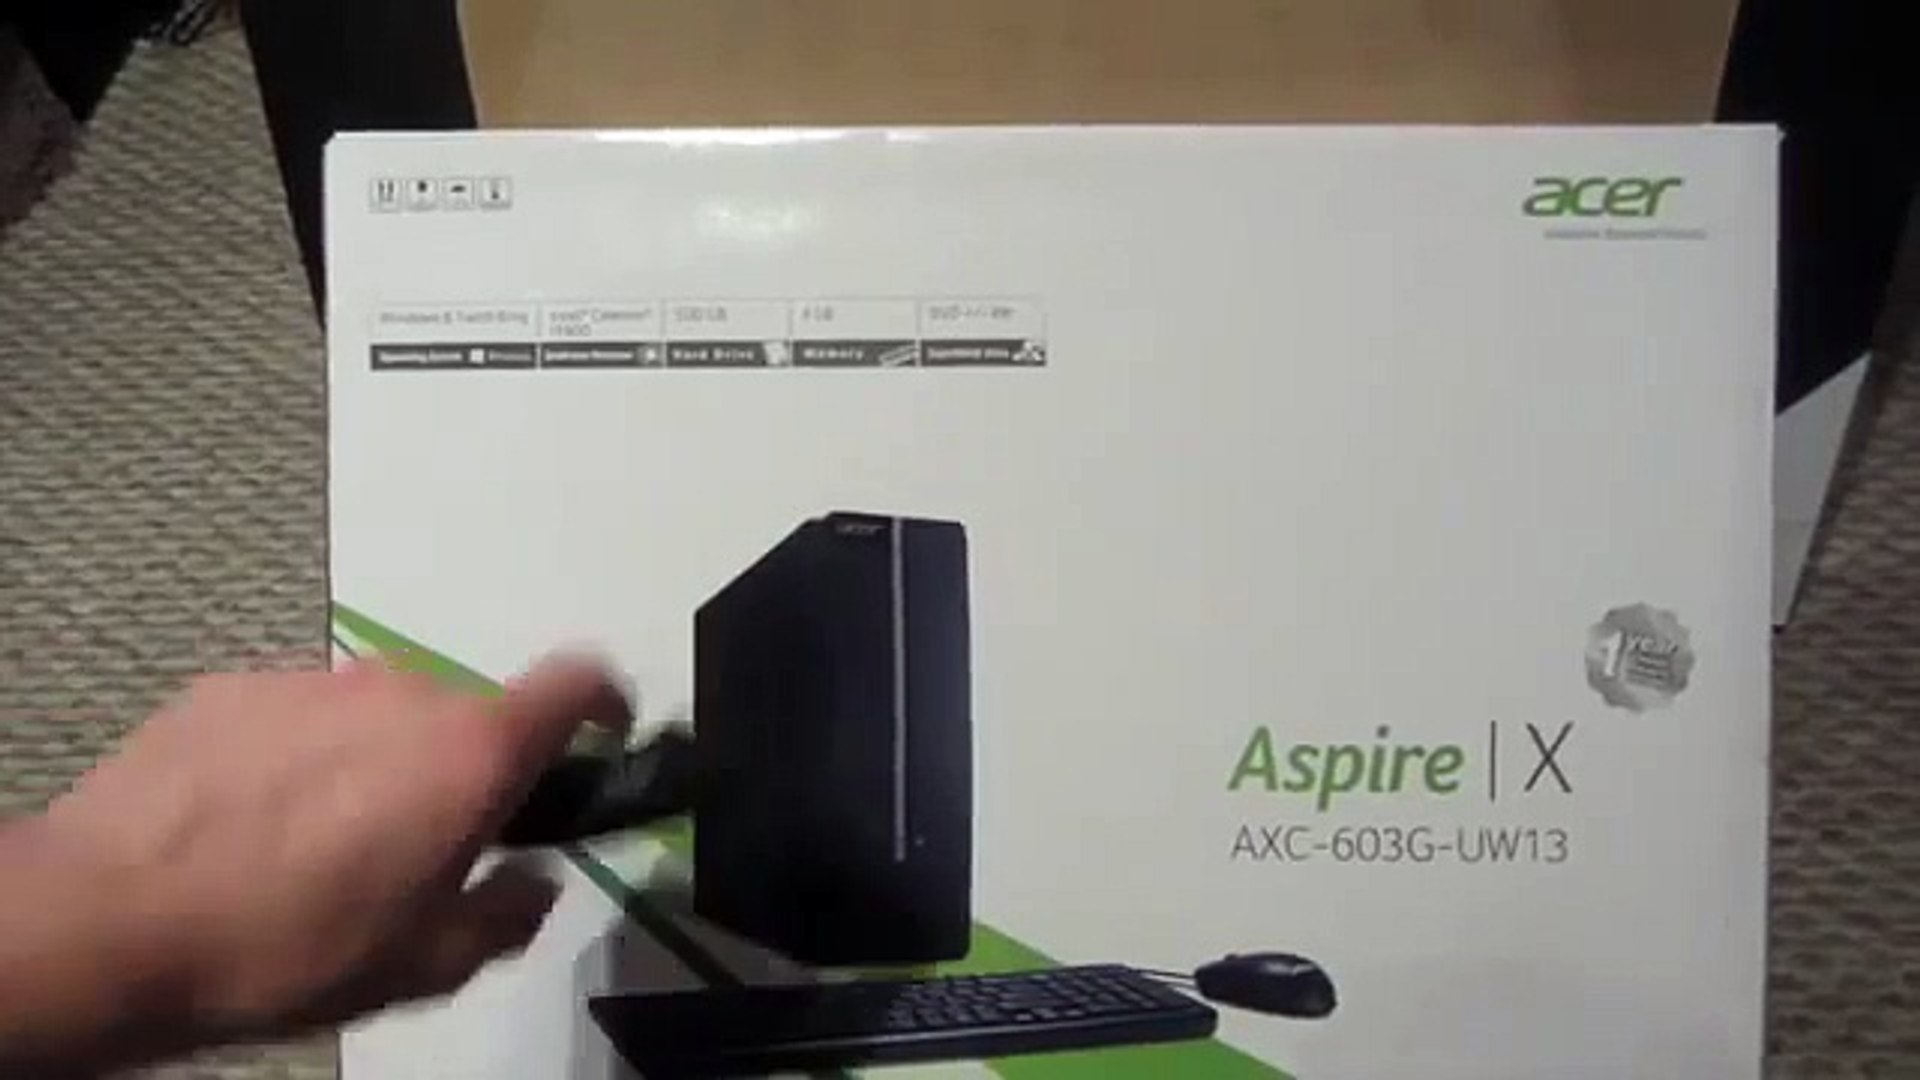 Acer Aspire XC Compact Desktop PC Intel Celeron J1900 2GHz | AXC-603G-UW14  Reviews - video Dailymotion